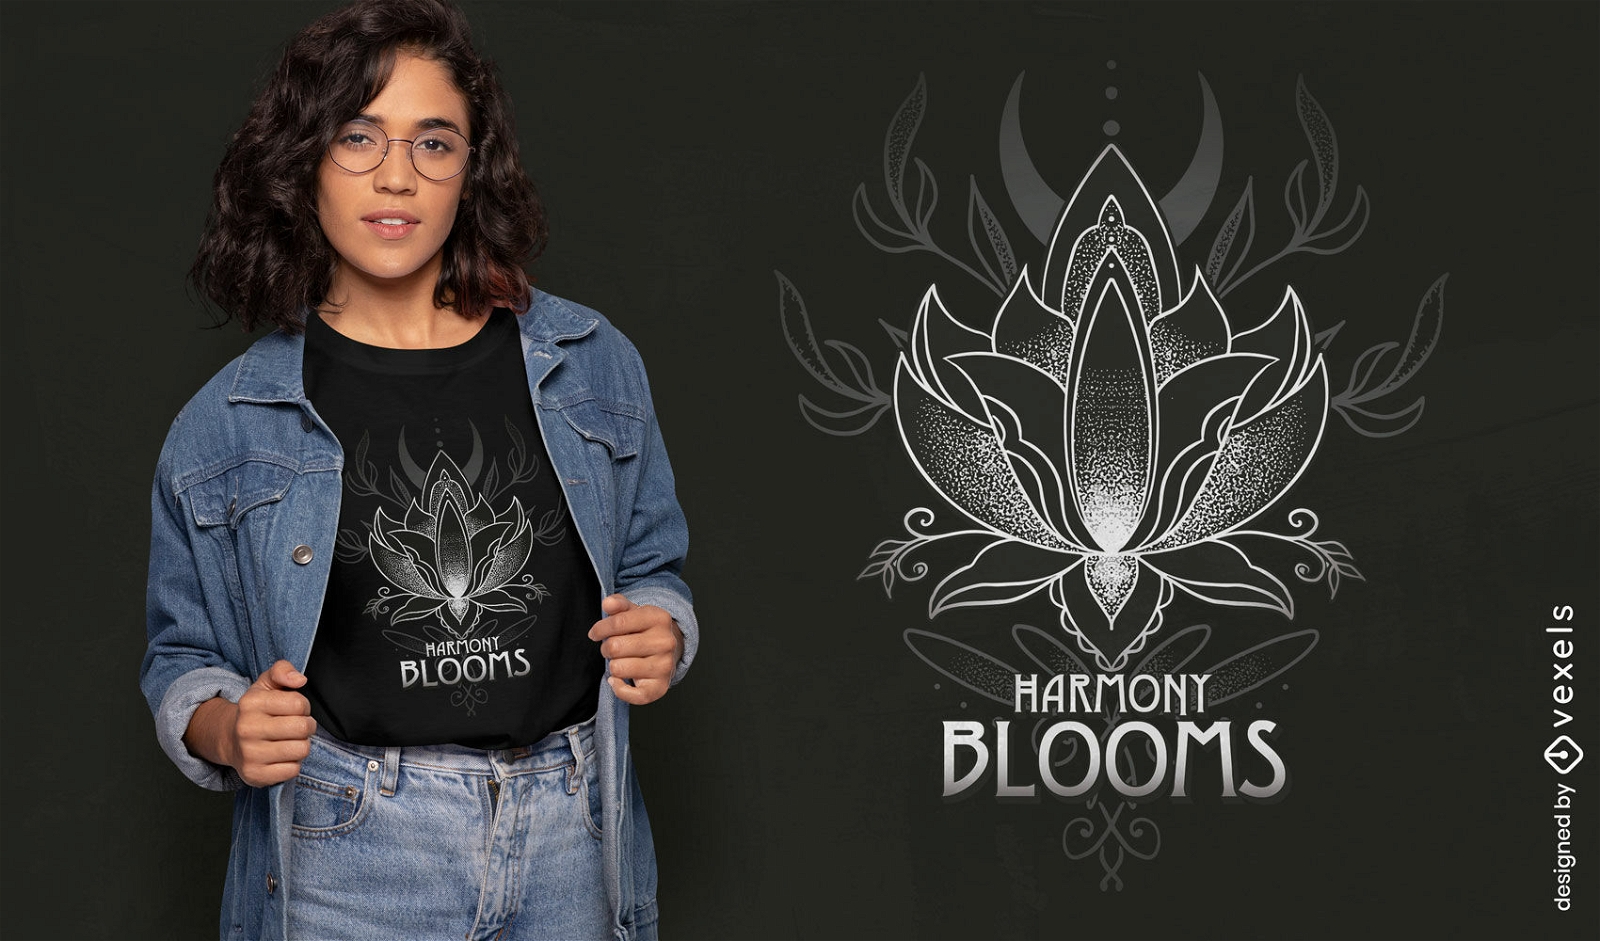 Lotus harmony blooms quote t-shirt design